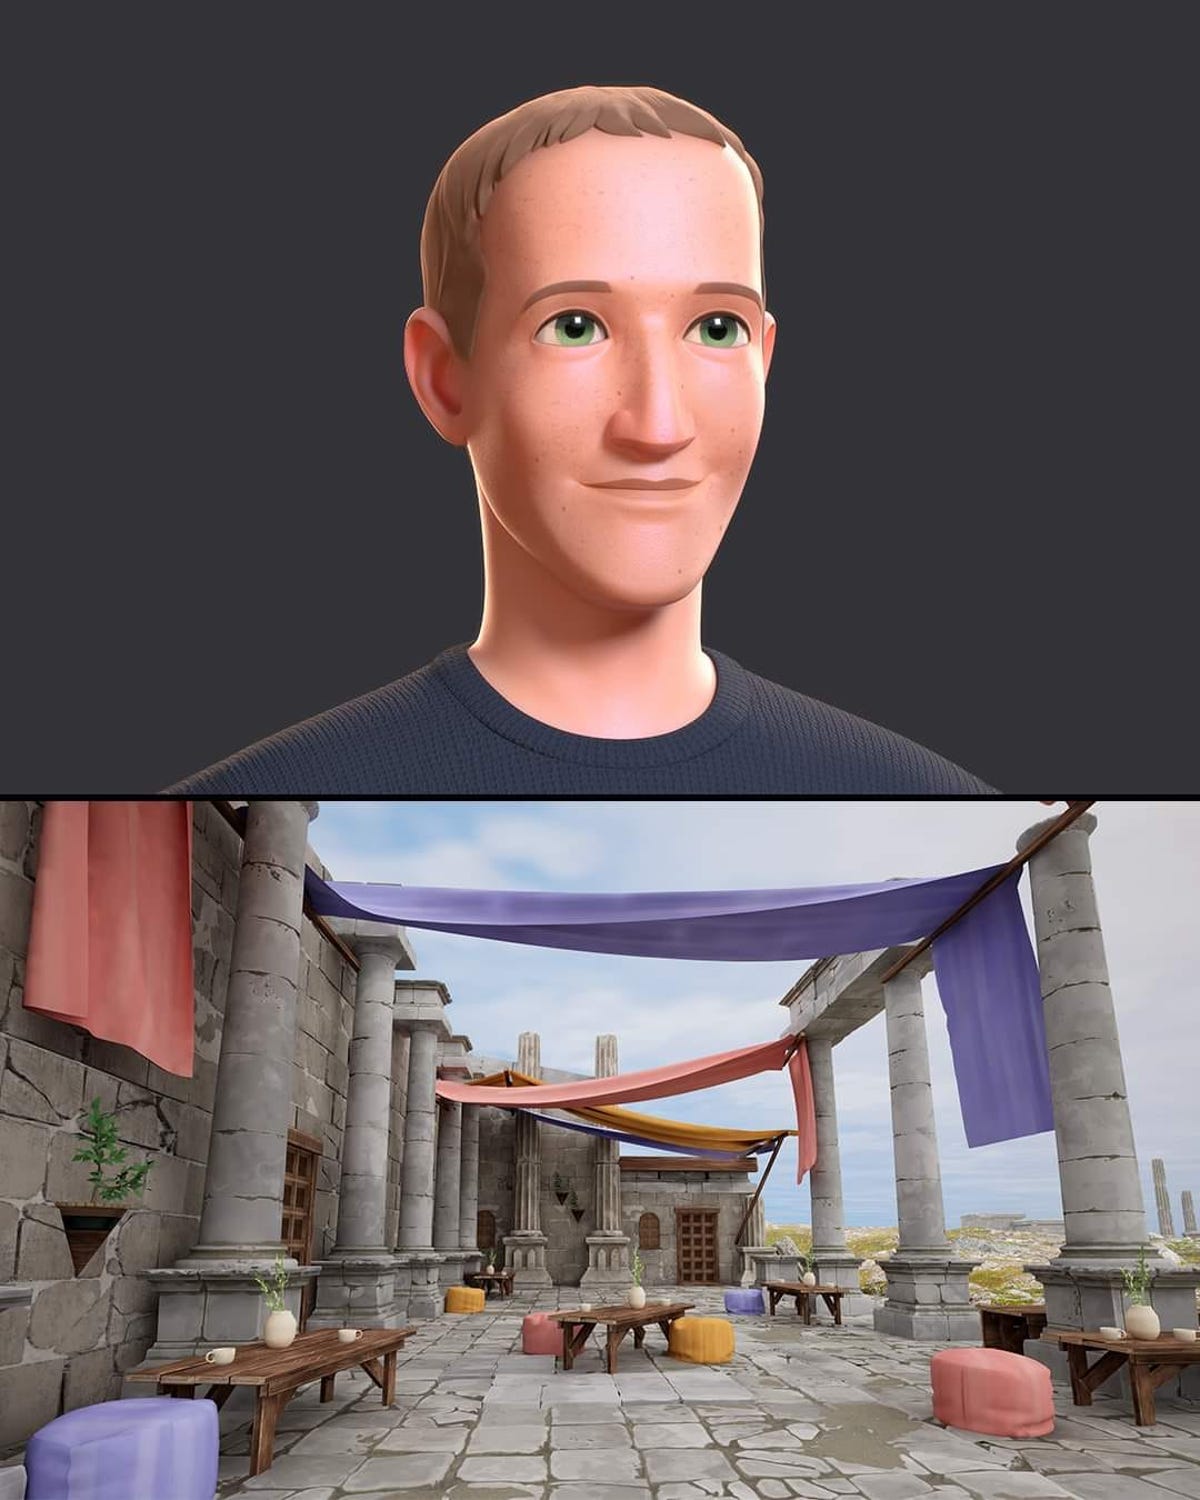 Mark Zuckerberg's avatar in virtual reality